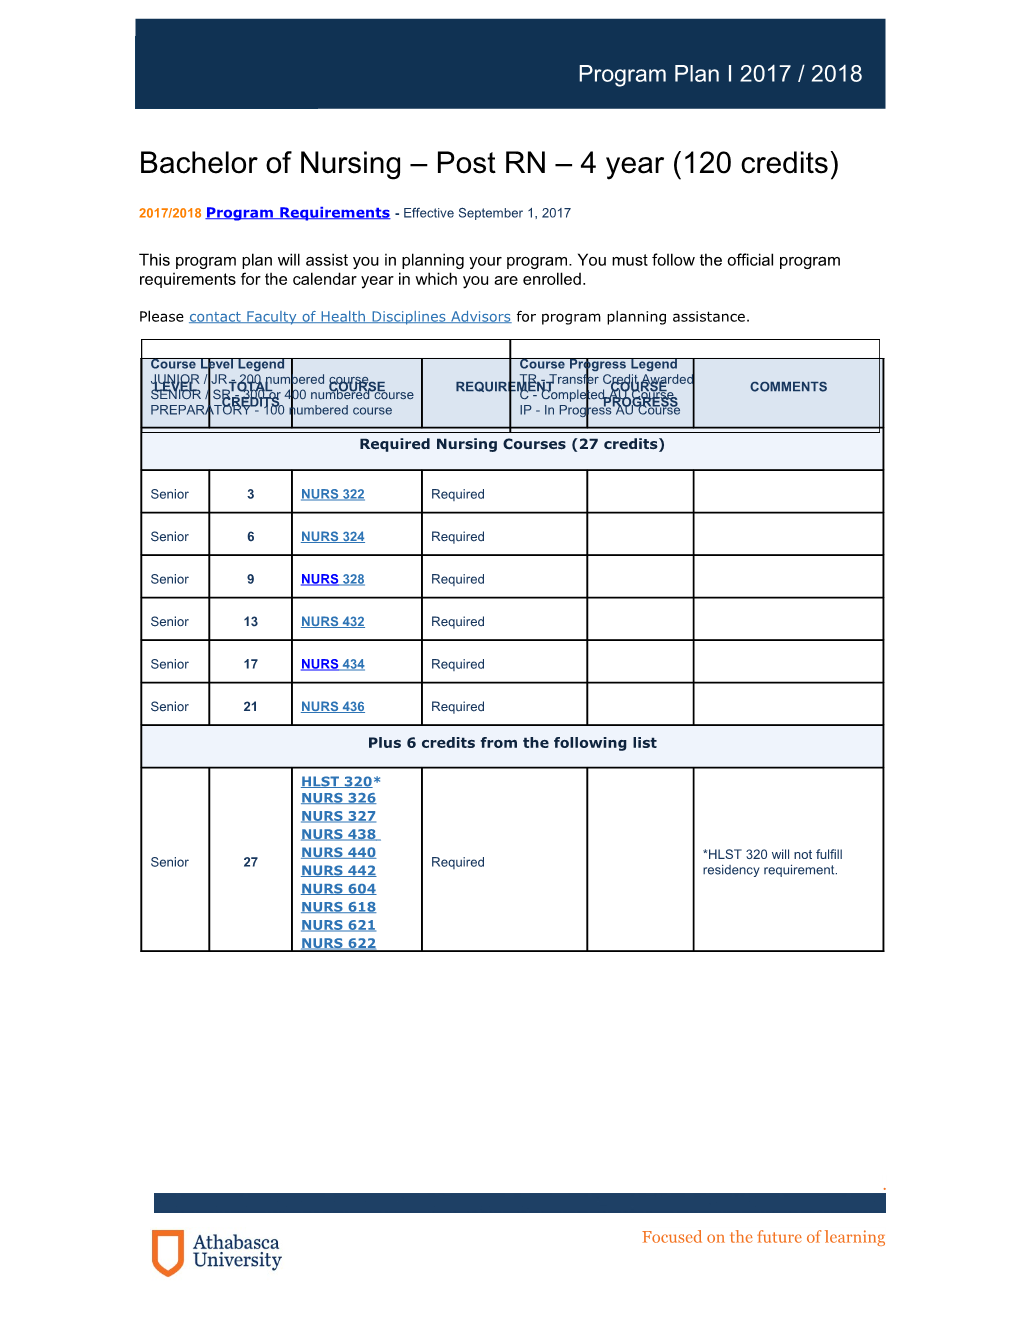 Bachelor of Nursing Post RN 4 Year (120 Credits)